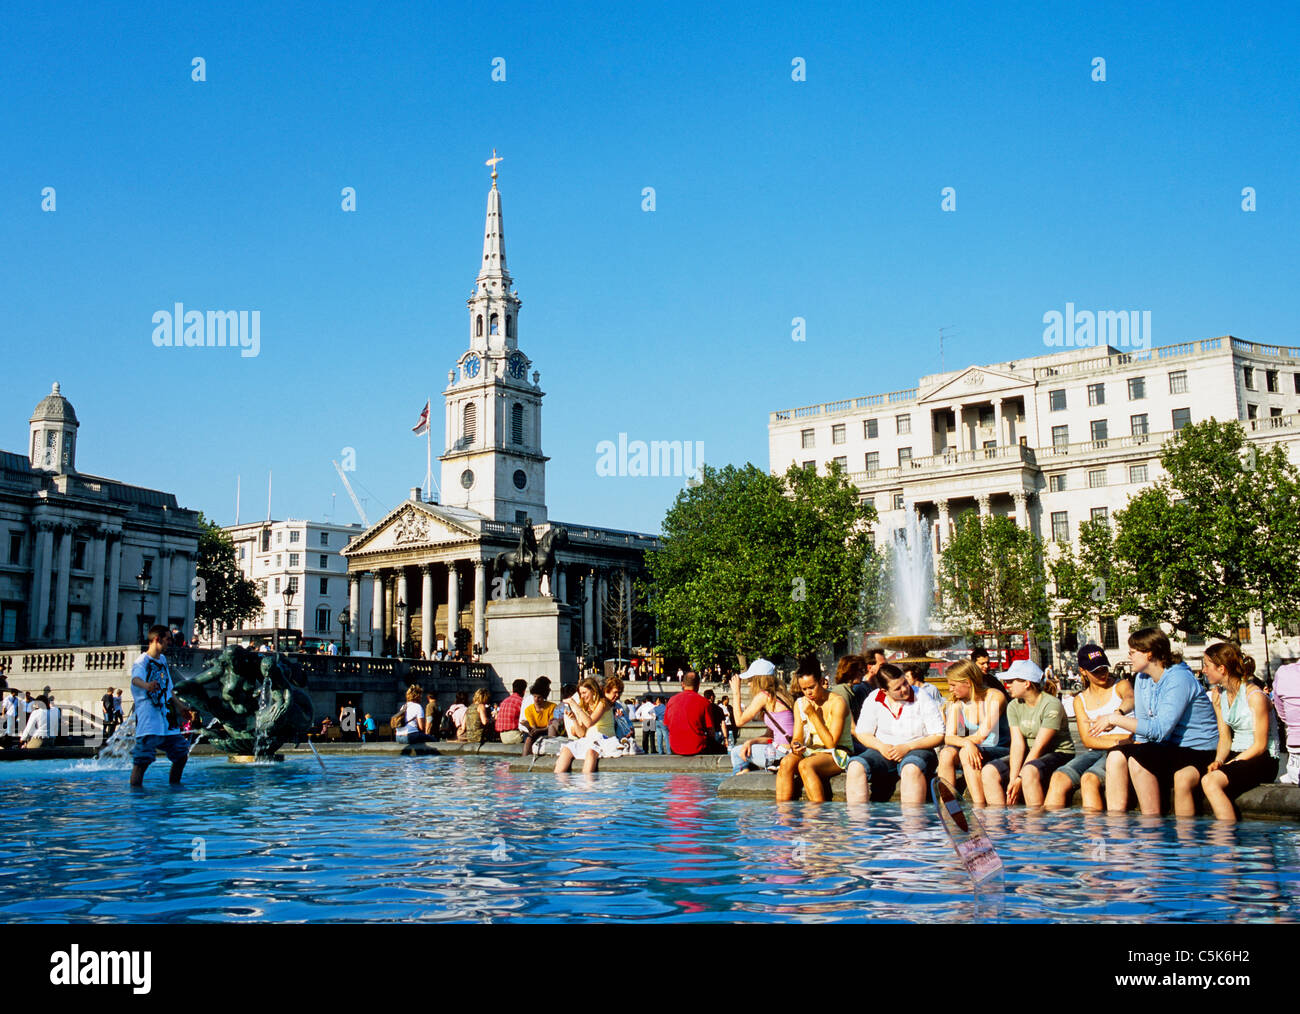 Menschen In den Brunnen Trafalgar Square-London-Uk Stockfoto